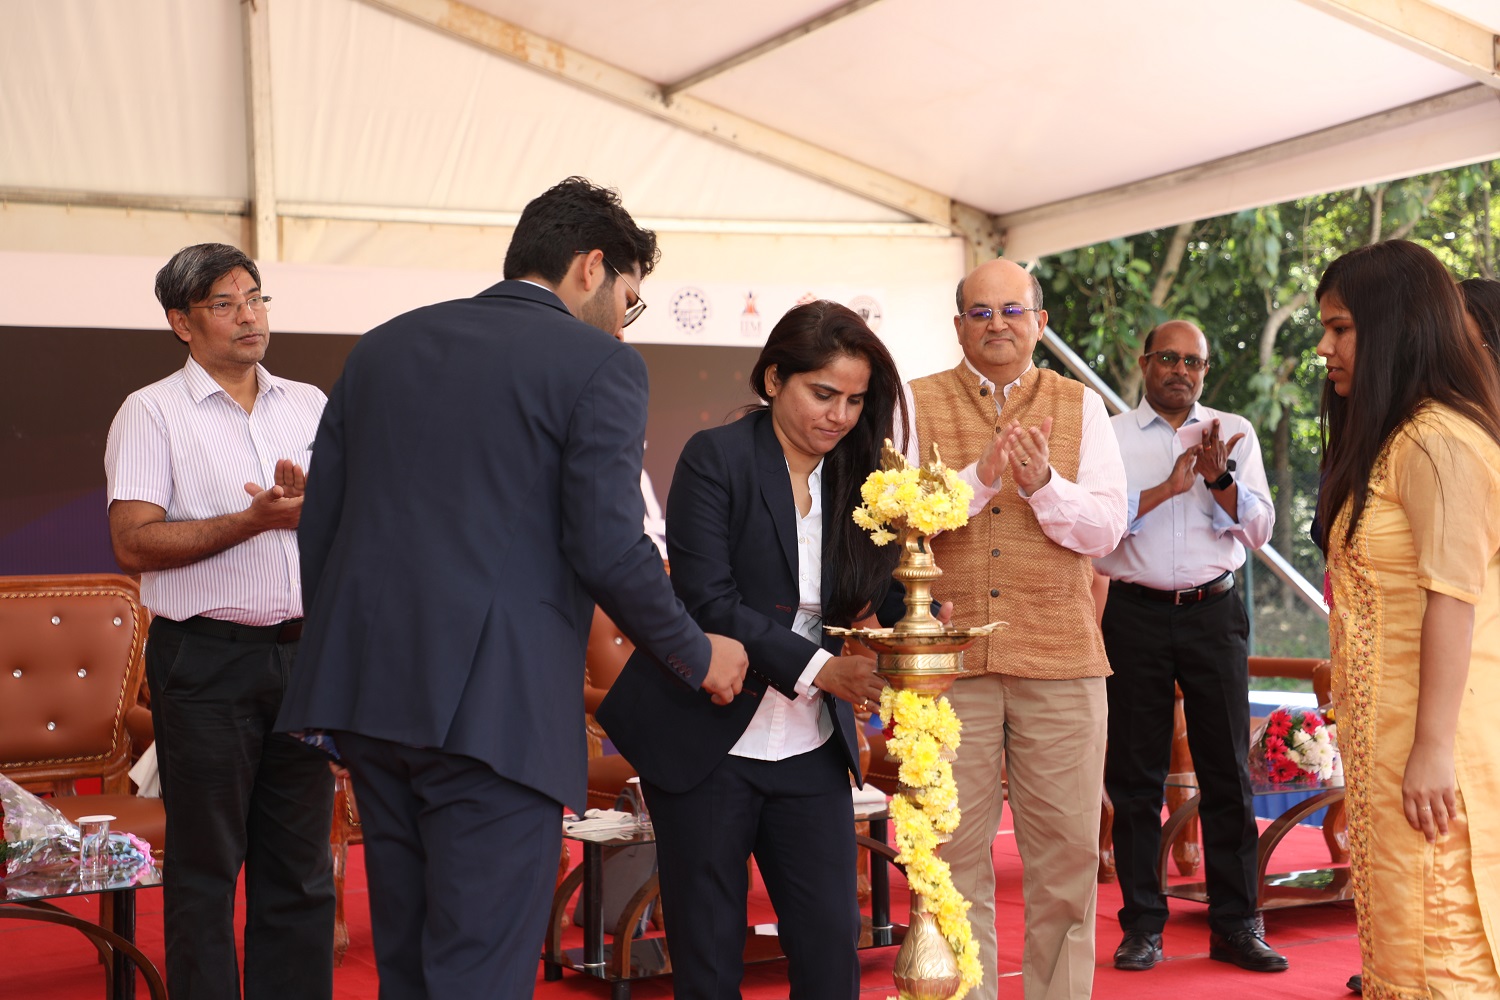 Ms. Pinki Singh, Gold Medalist – Team India, Lawn Bowling, at the 2022 Commonwealth Games, inaugurates Sangram at IIMB.